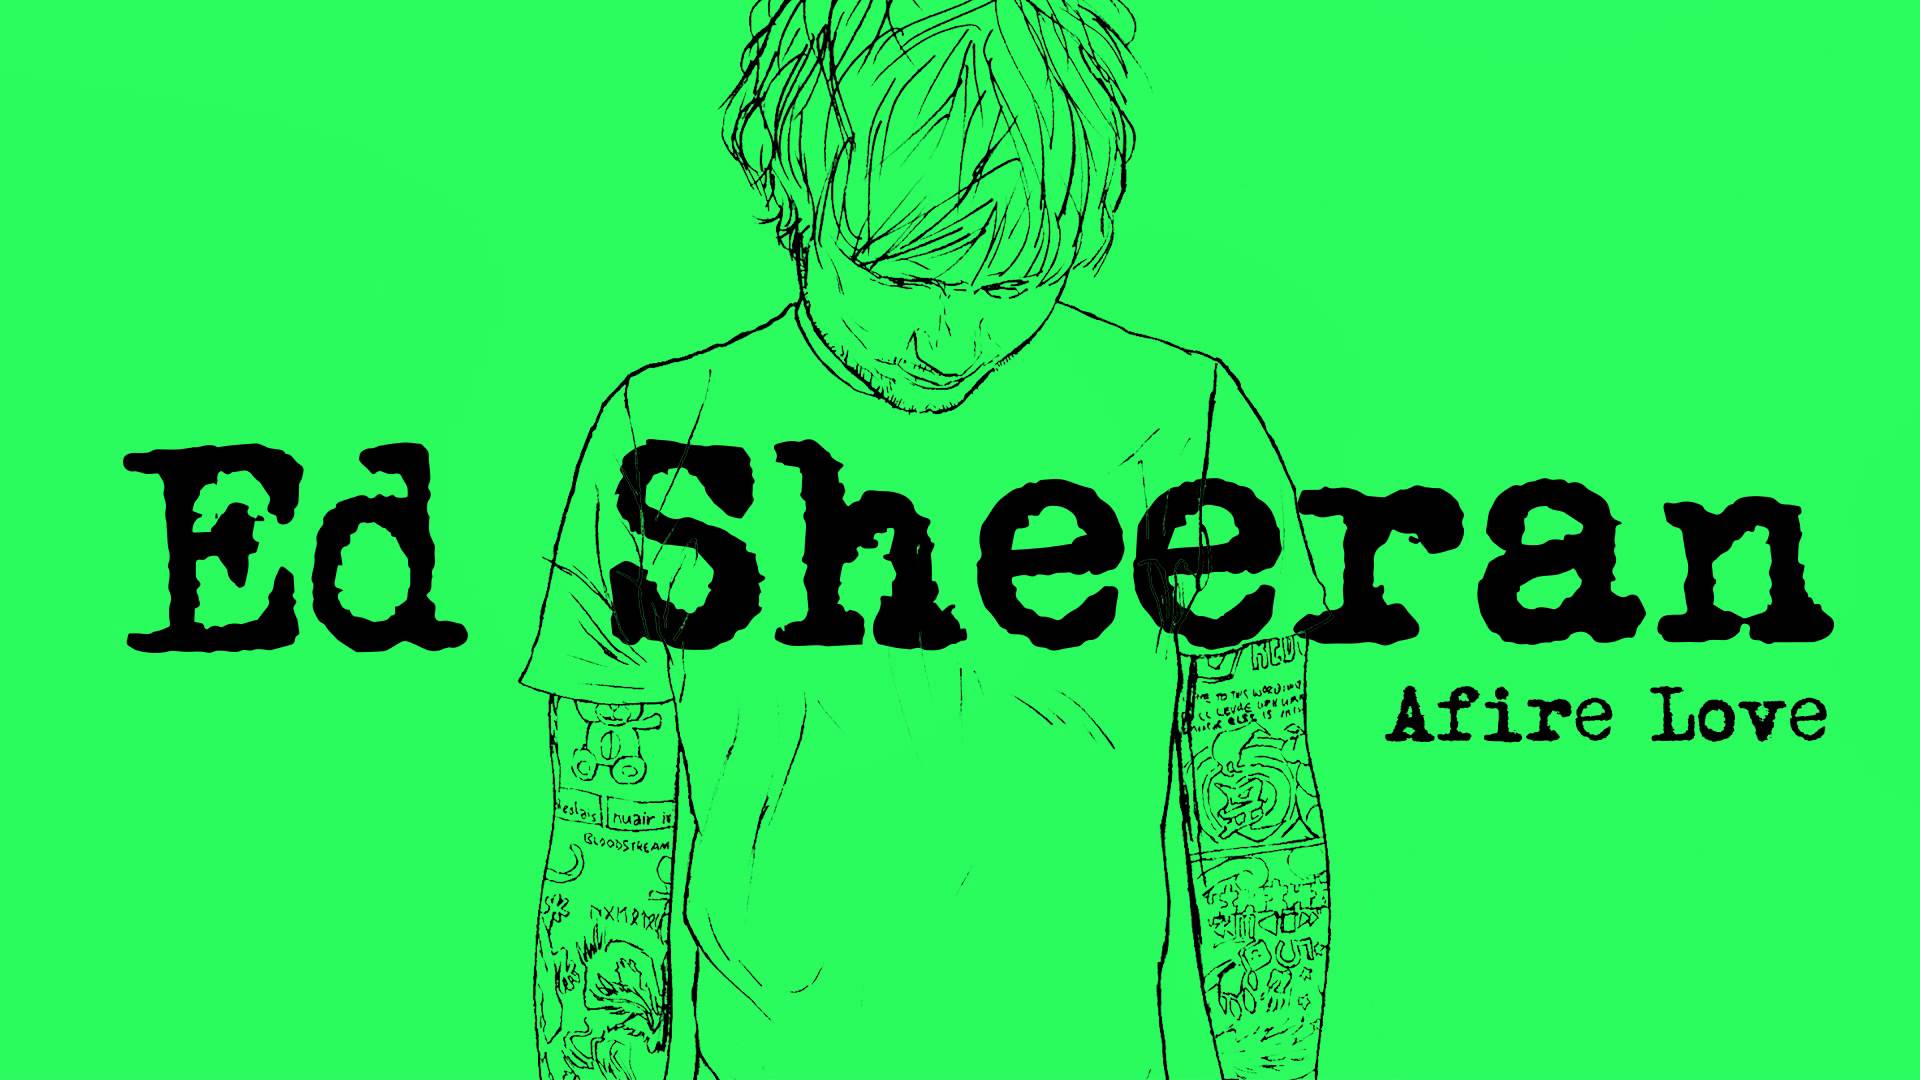 Ed Sheeran Afire Love Official